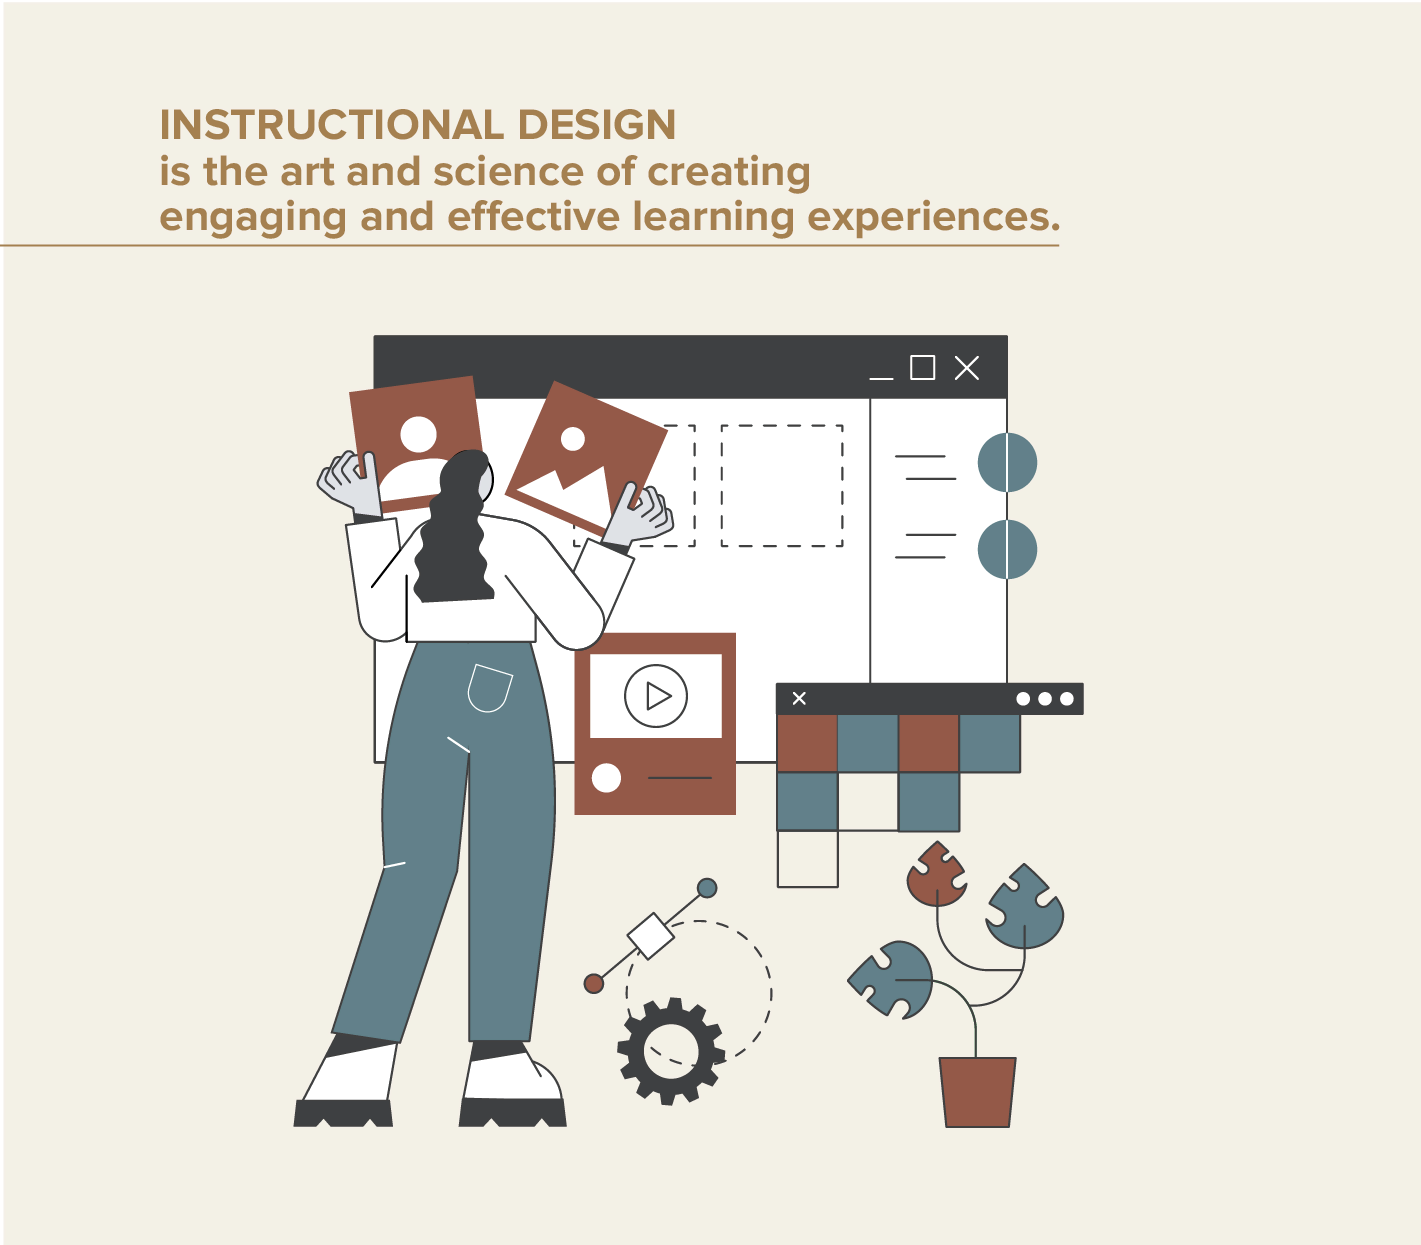 Definition of Instructional Design